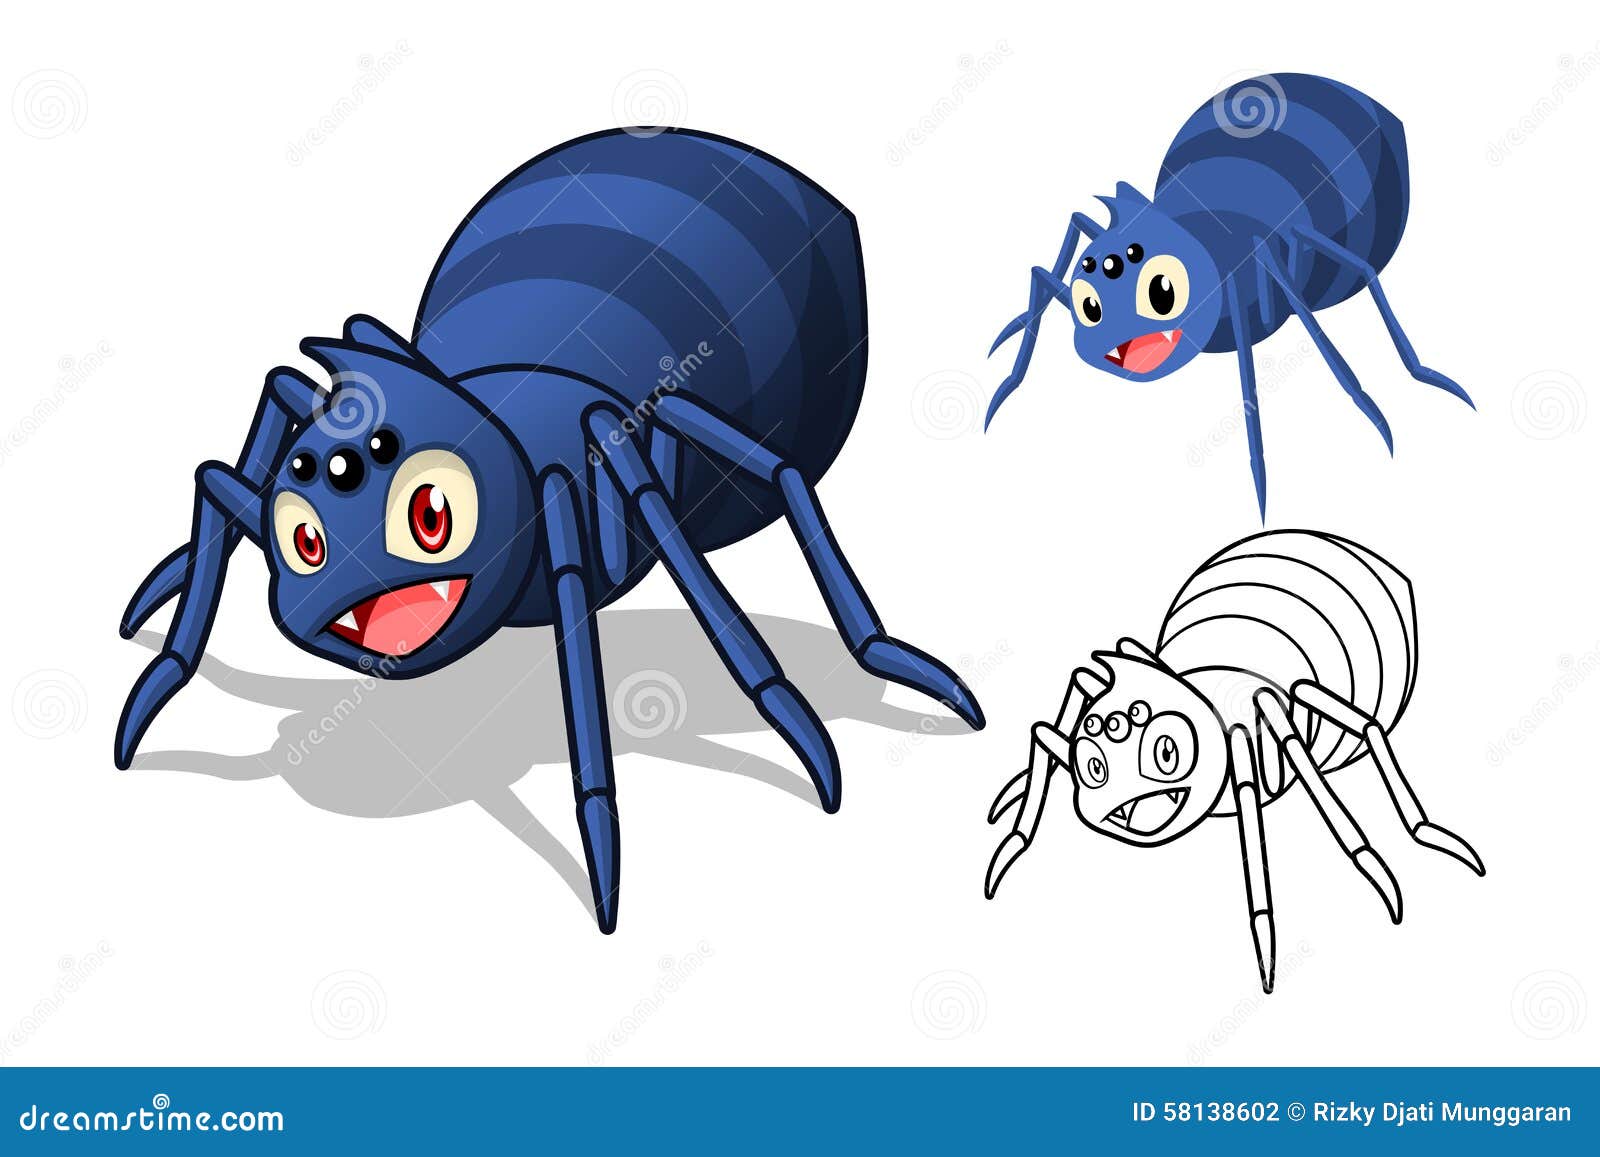 detailed-spider-cartoon-character-flat-design-line-art-black-white-version-high-quality-vector-illustration-58138602.jpg